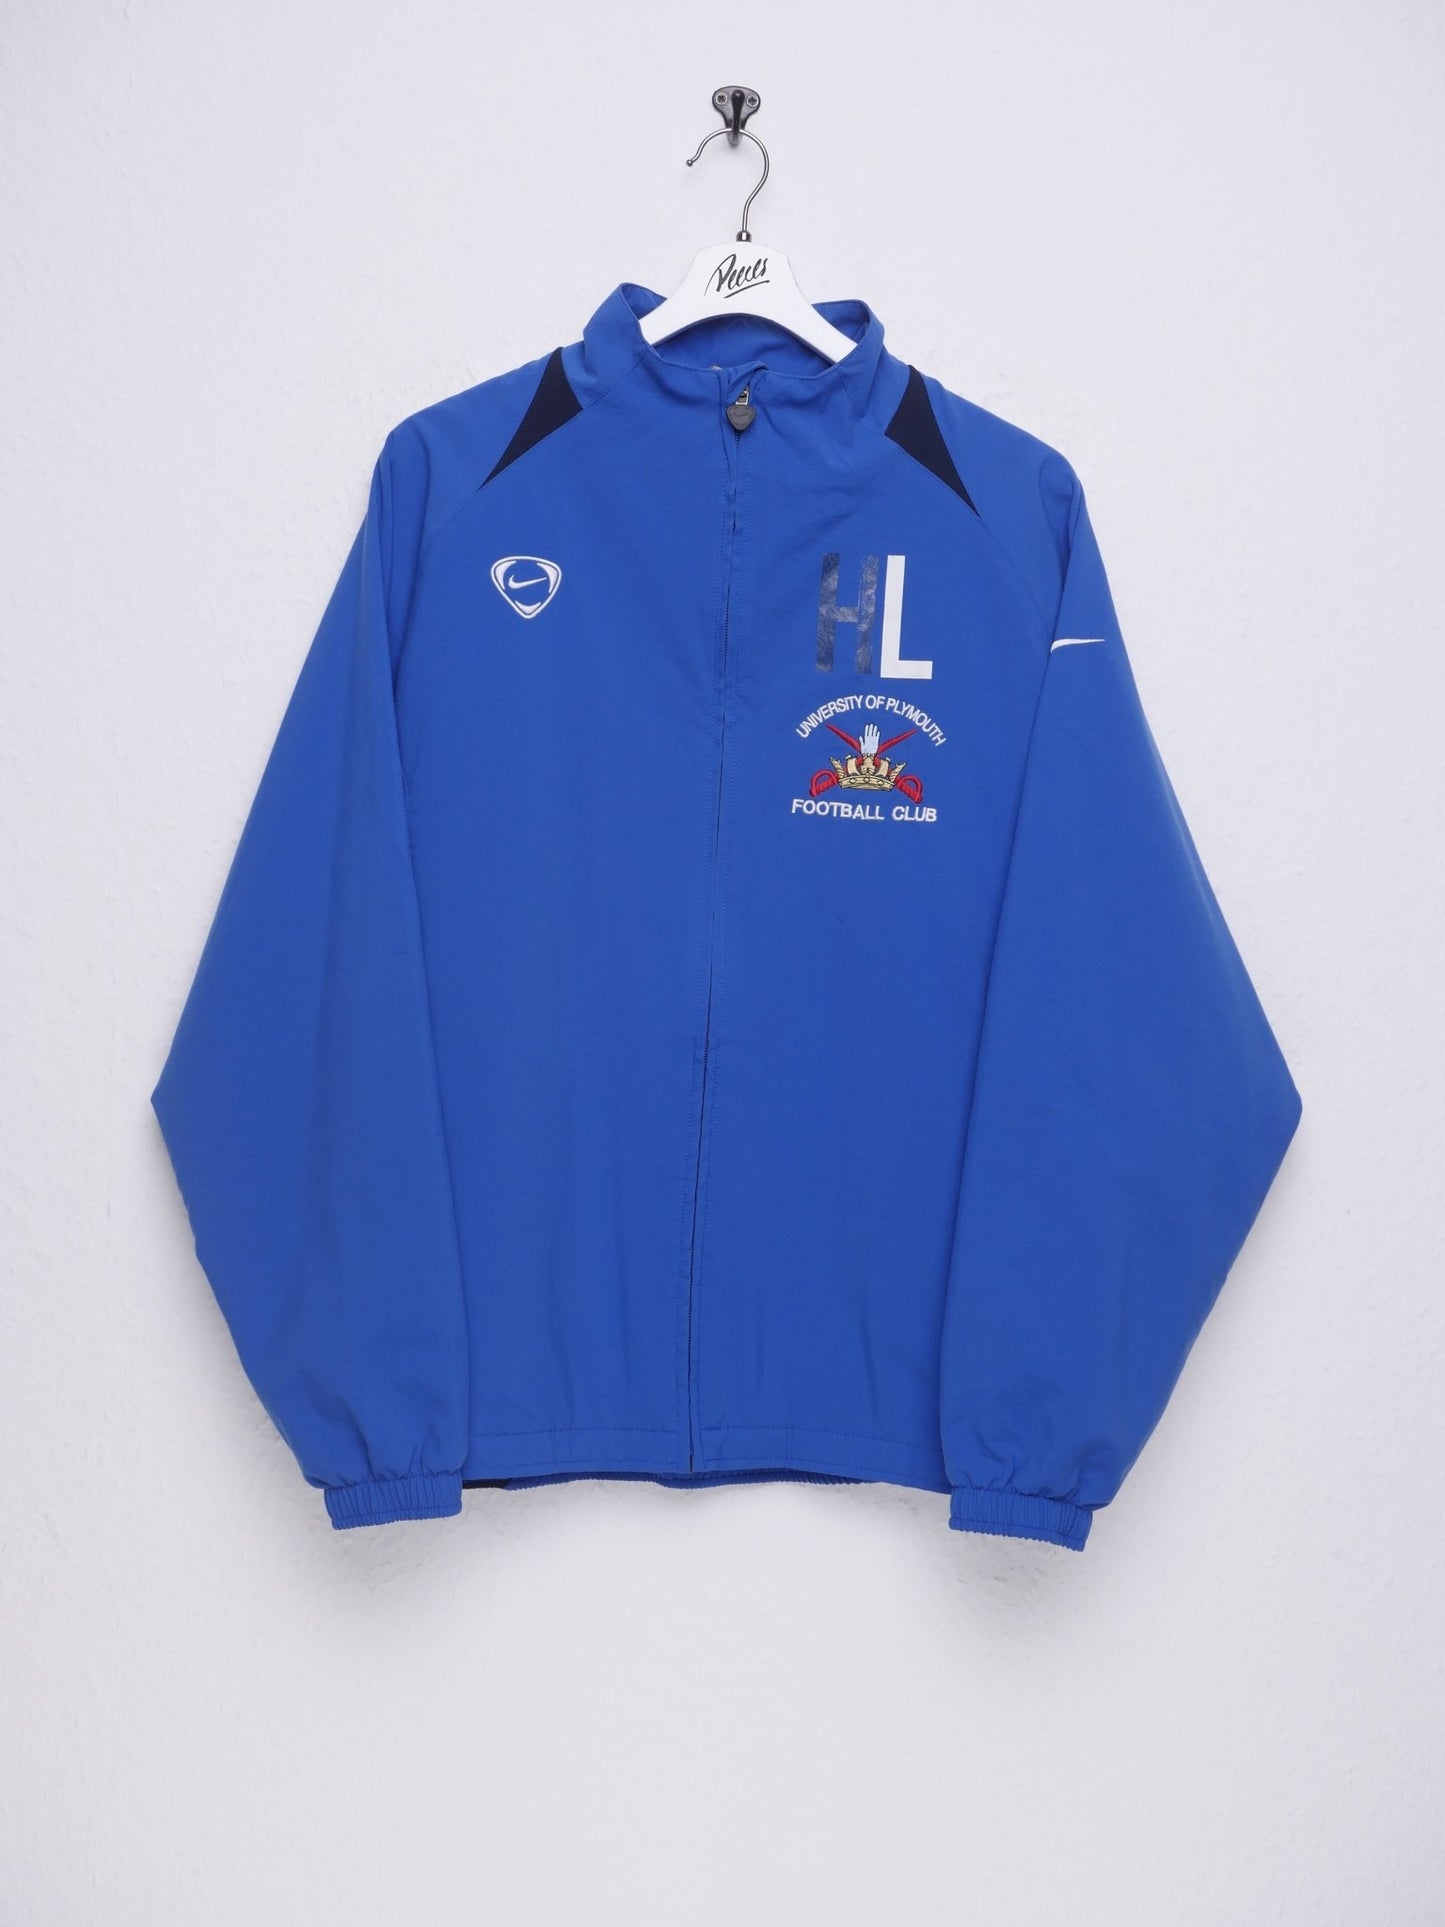 nike embroidered Logo 'University of Playmouth' blue Track Jacket - Peeces